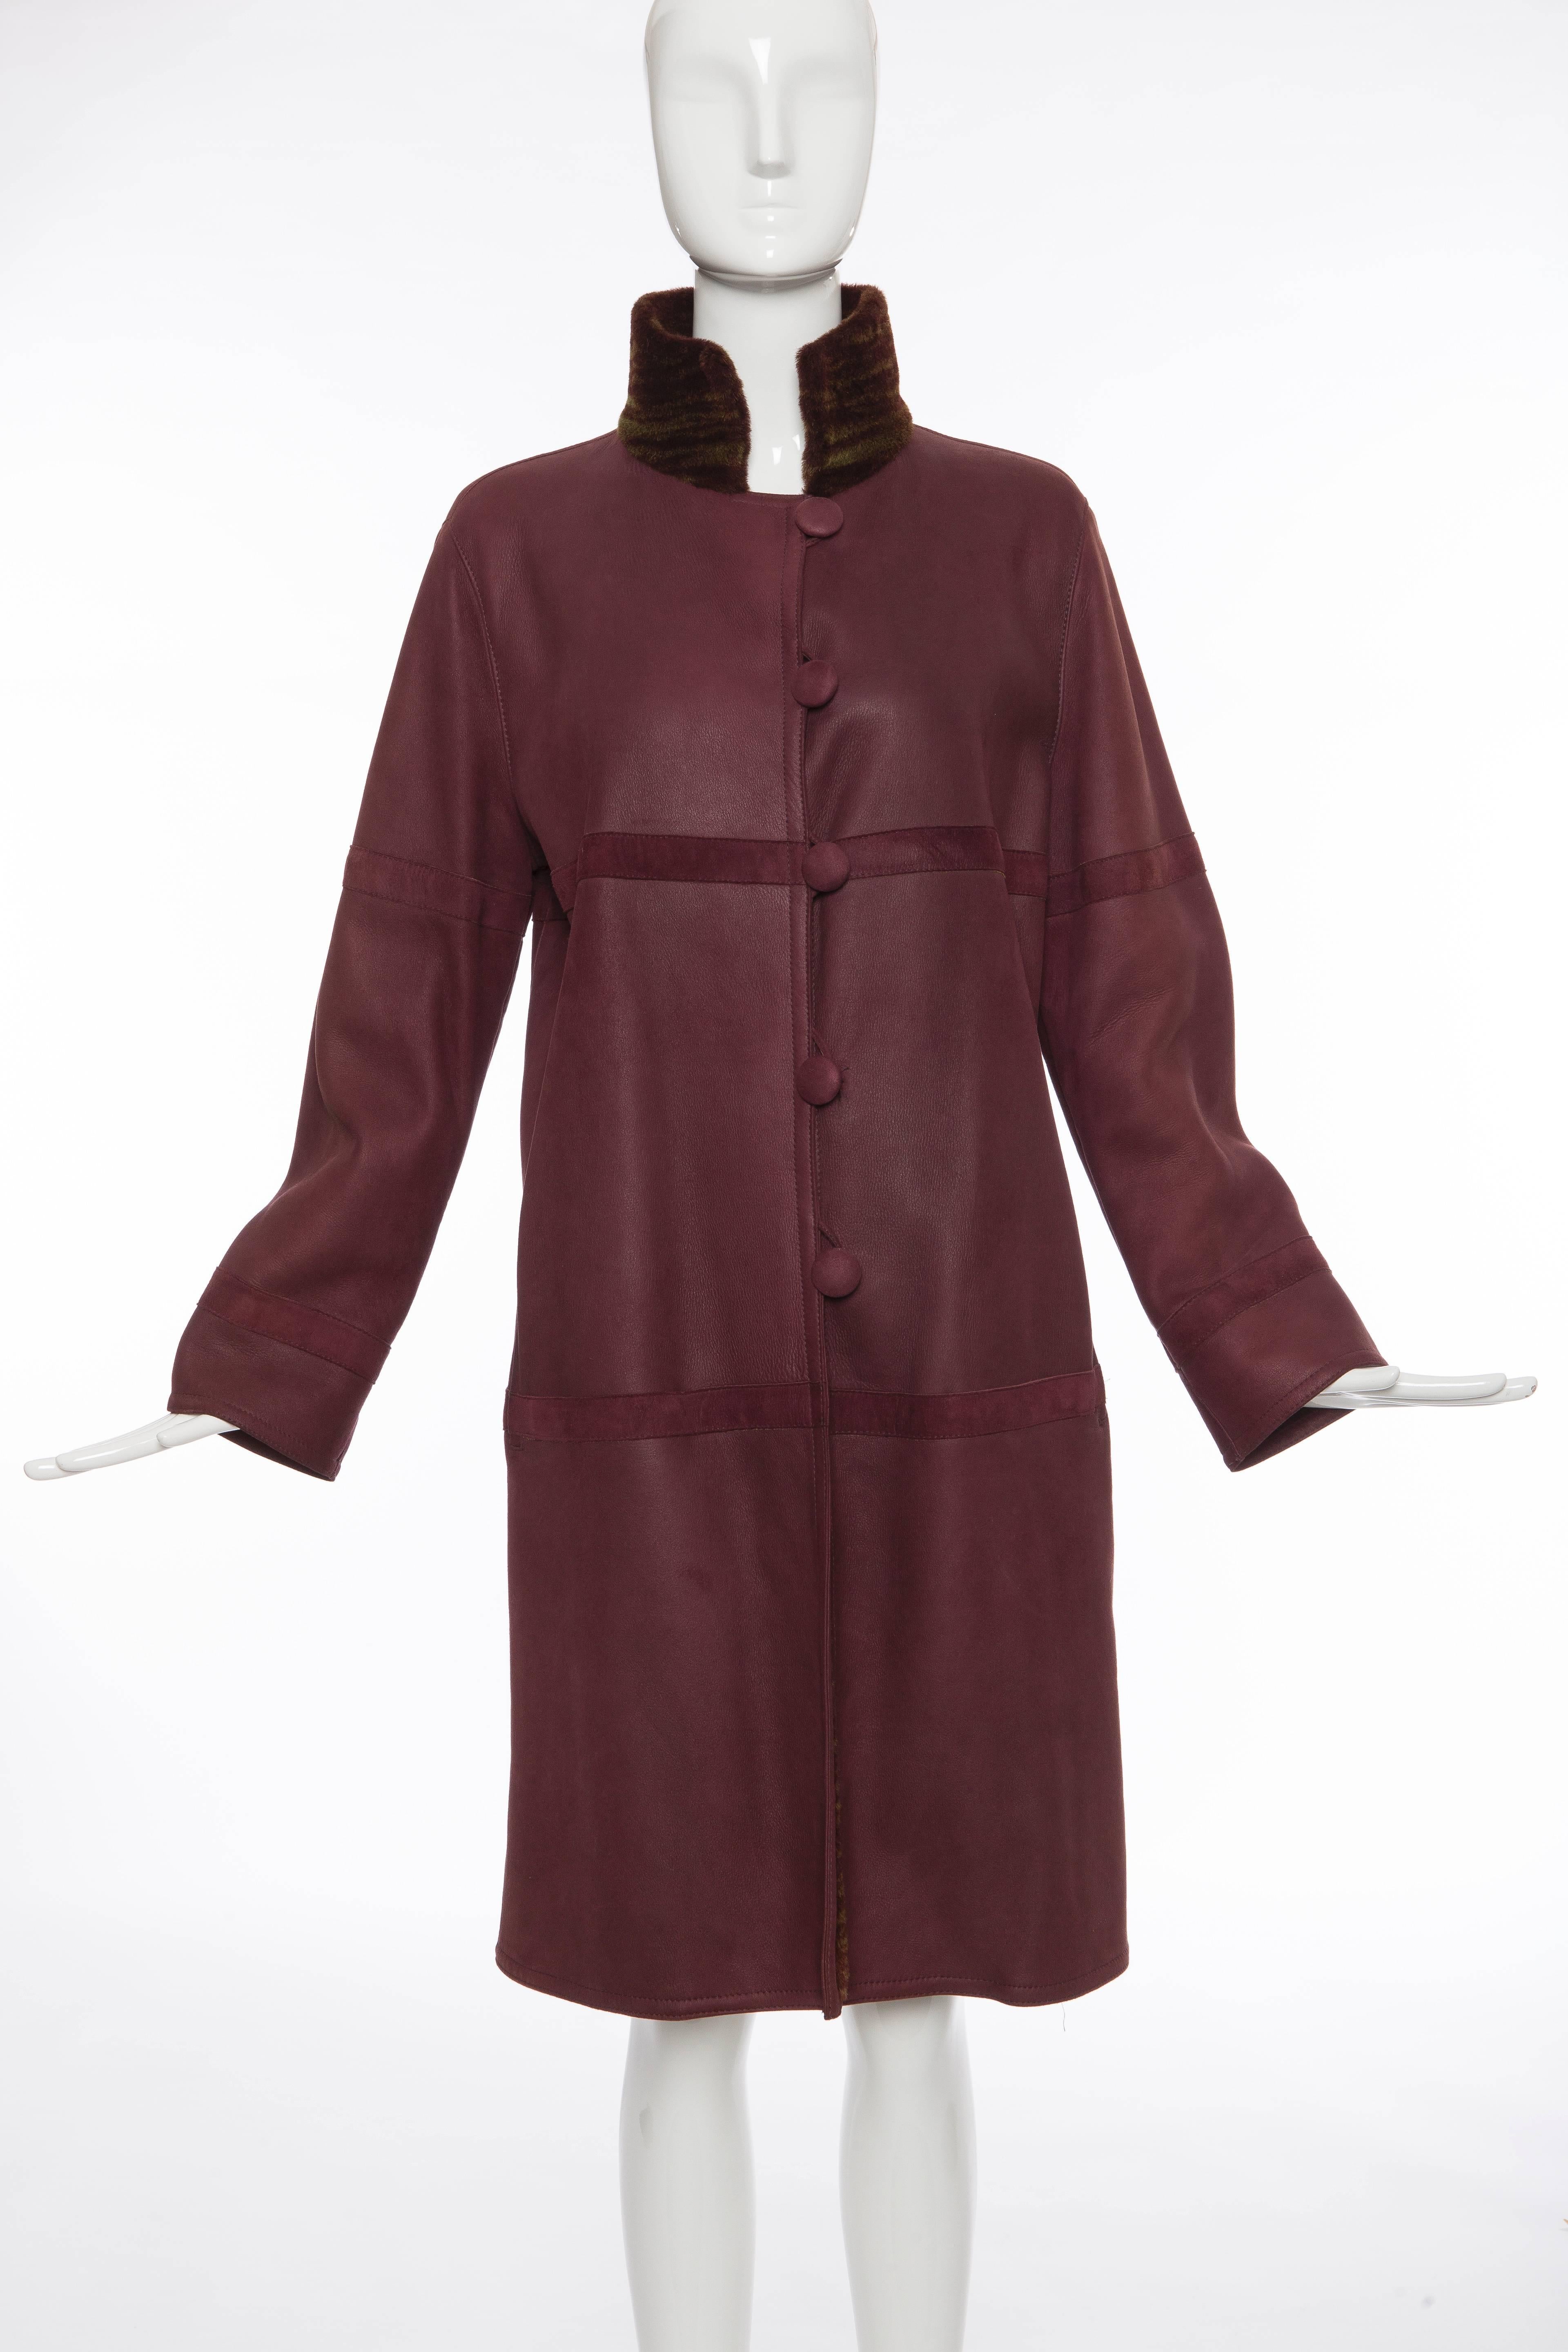 Oscar De la Renta Couture, plum button front,shearling coat with two front pockets.